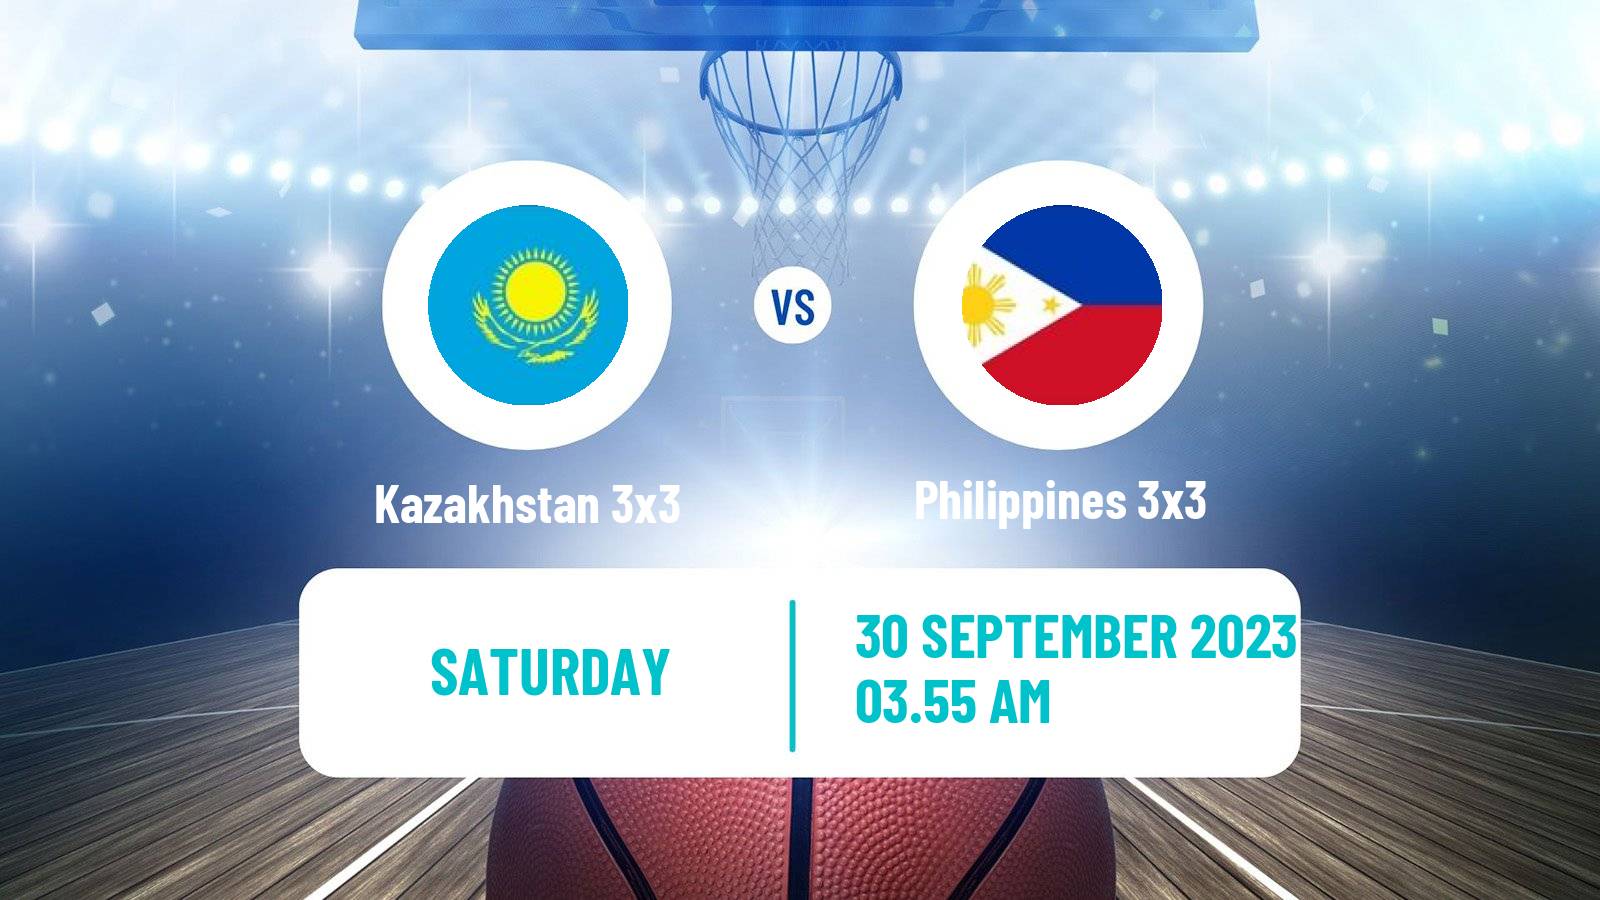 Basketball Asian Games Basketball 3x3 Kazakhstan 3x3 - Philippines 3x3